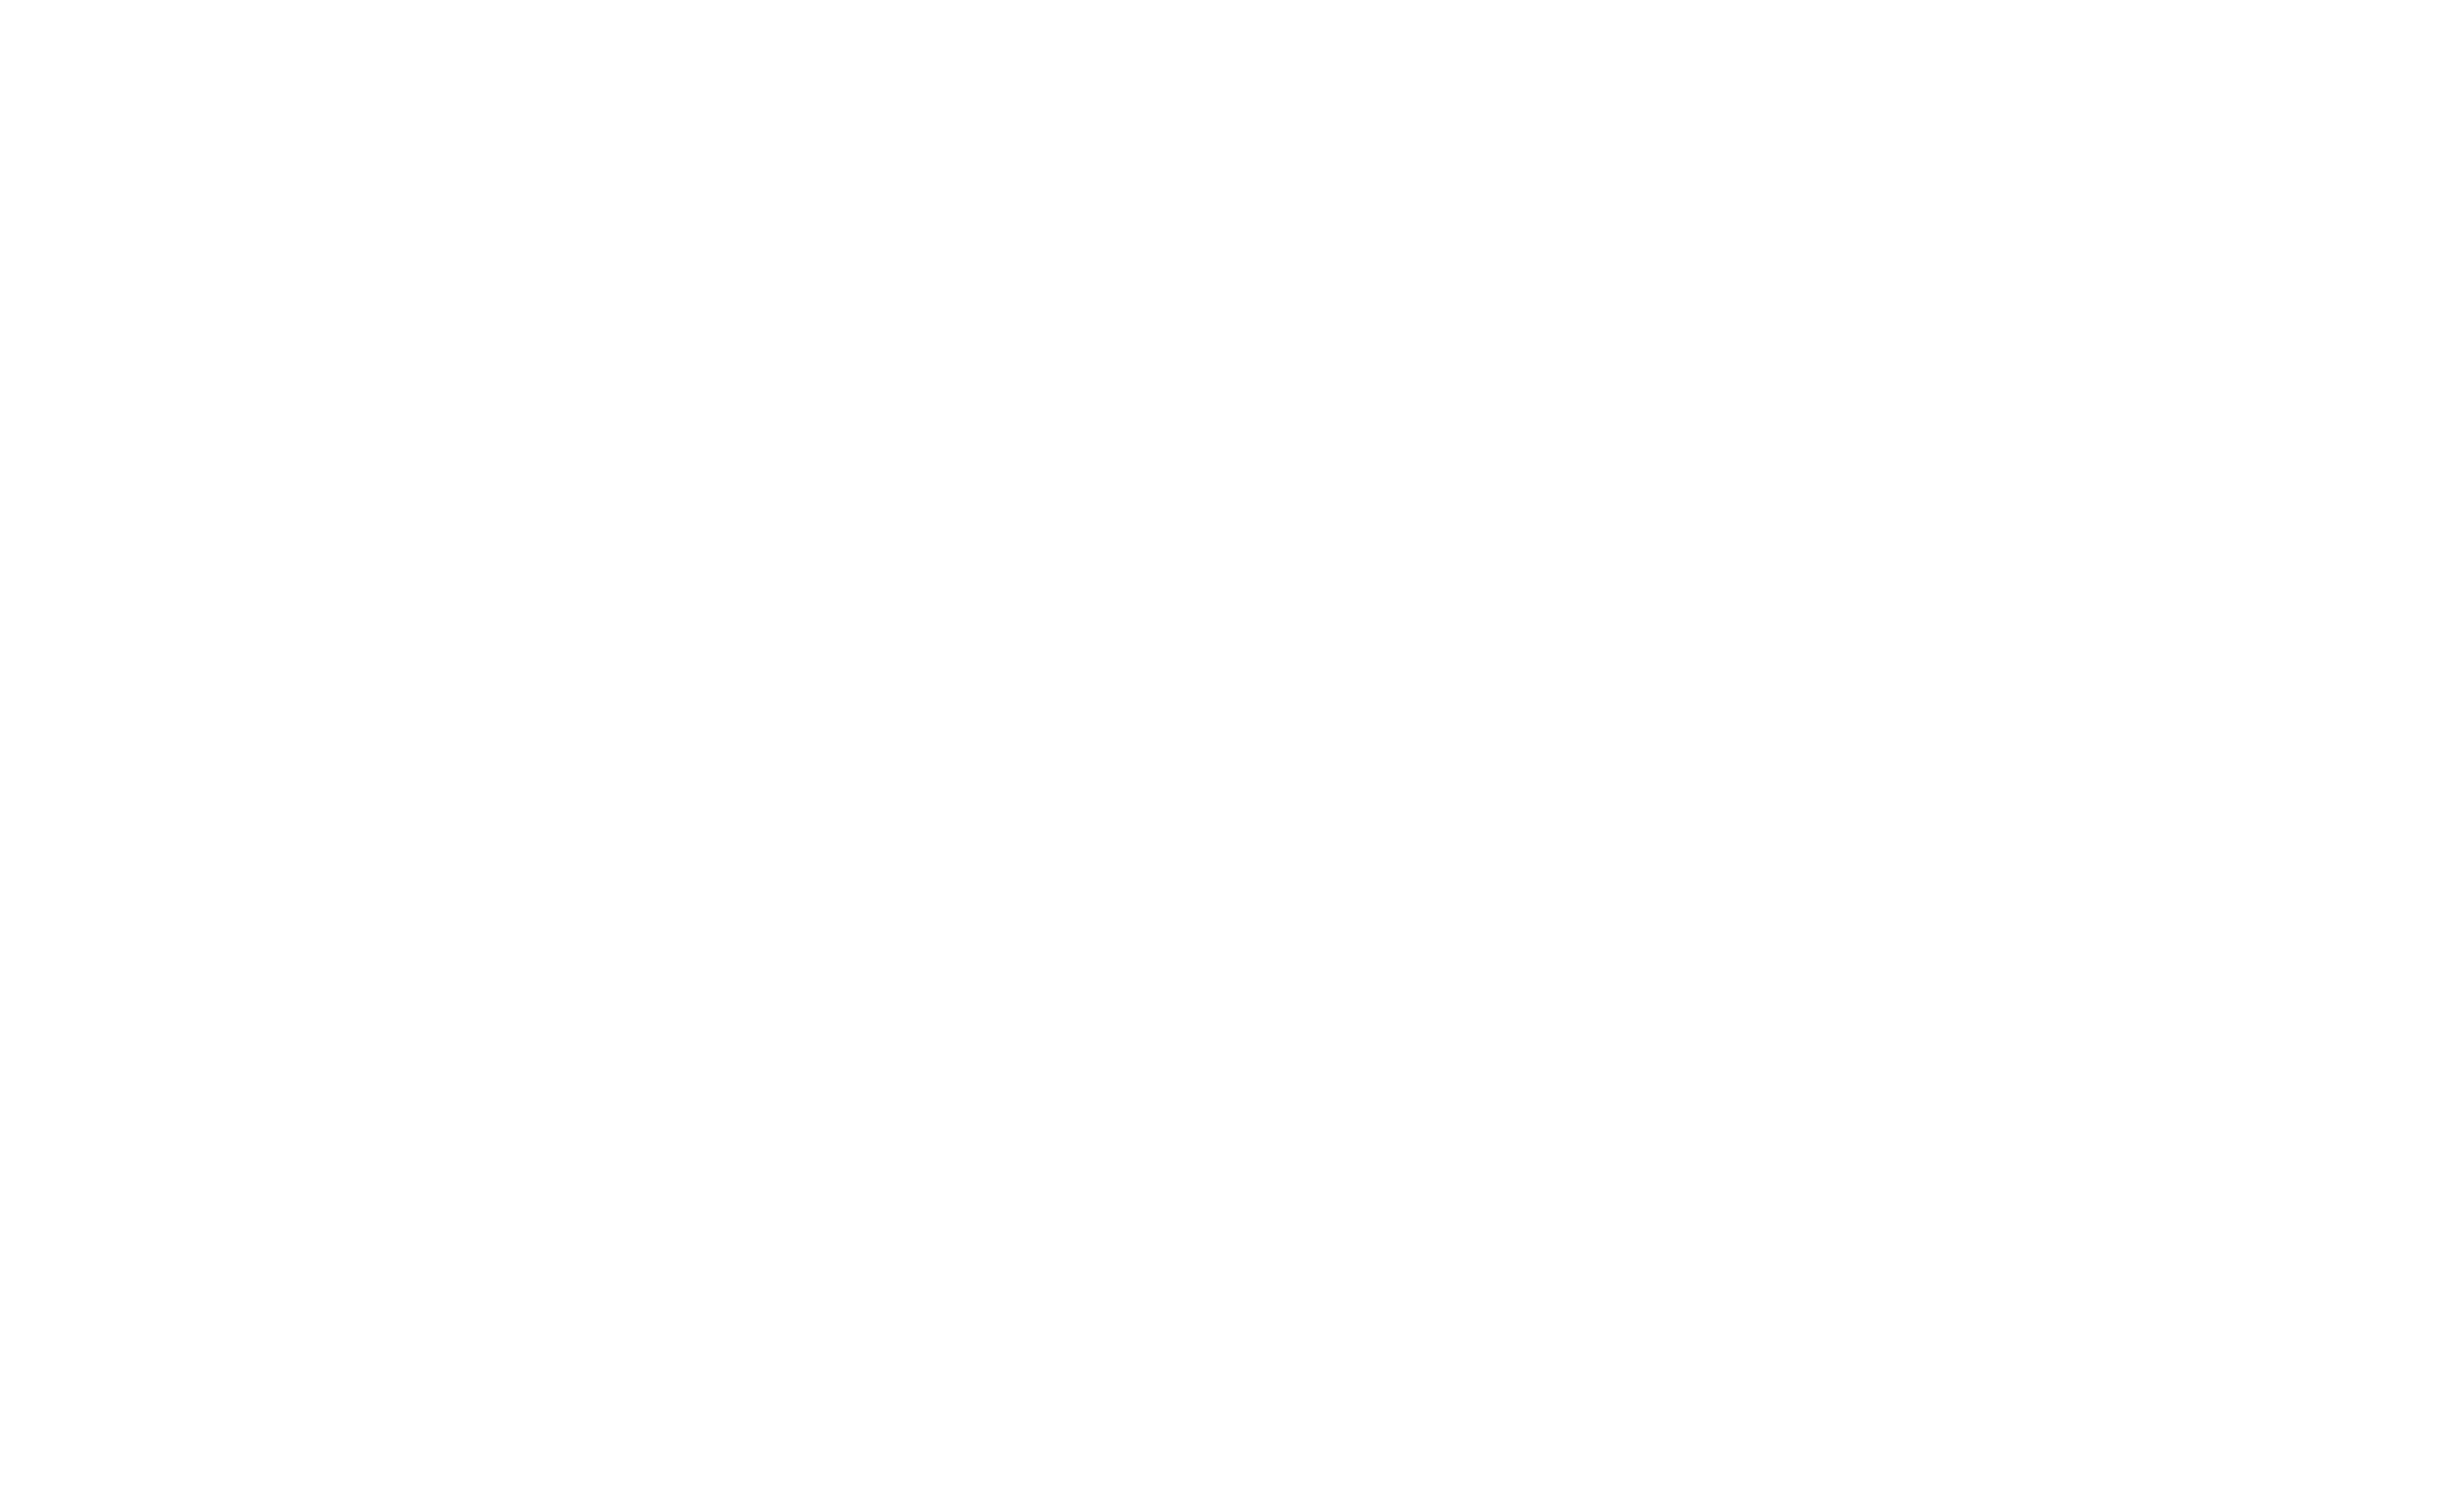 logo Trường Giang Camera